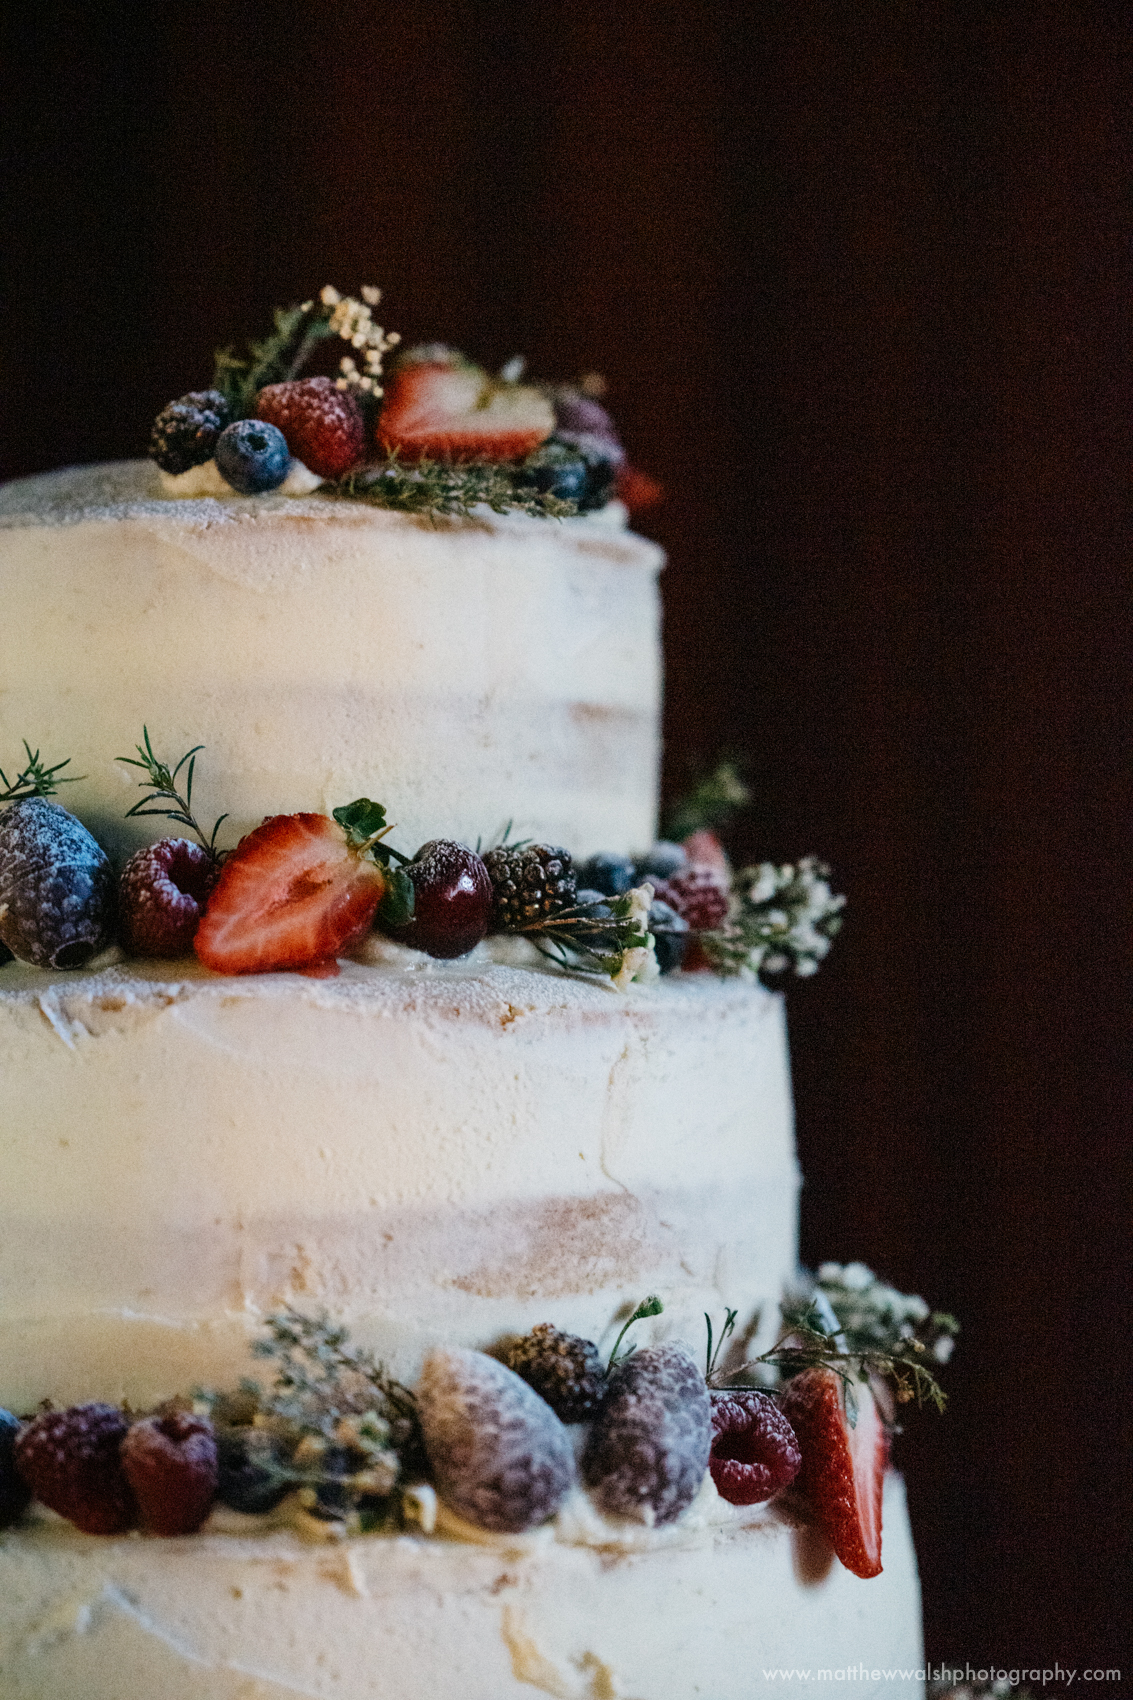 A very tasty looking wedding cake